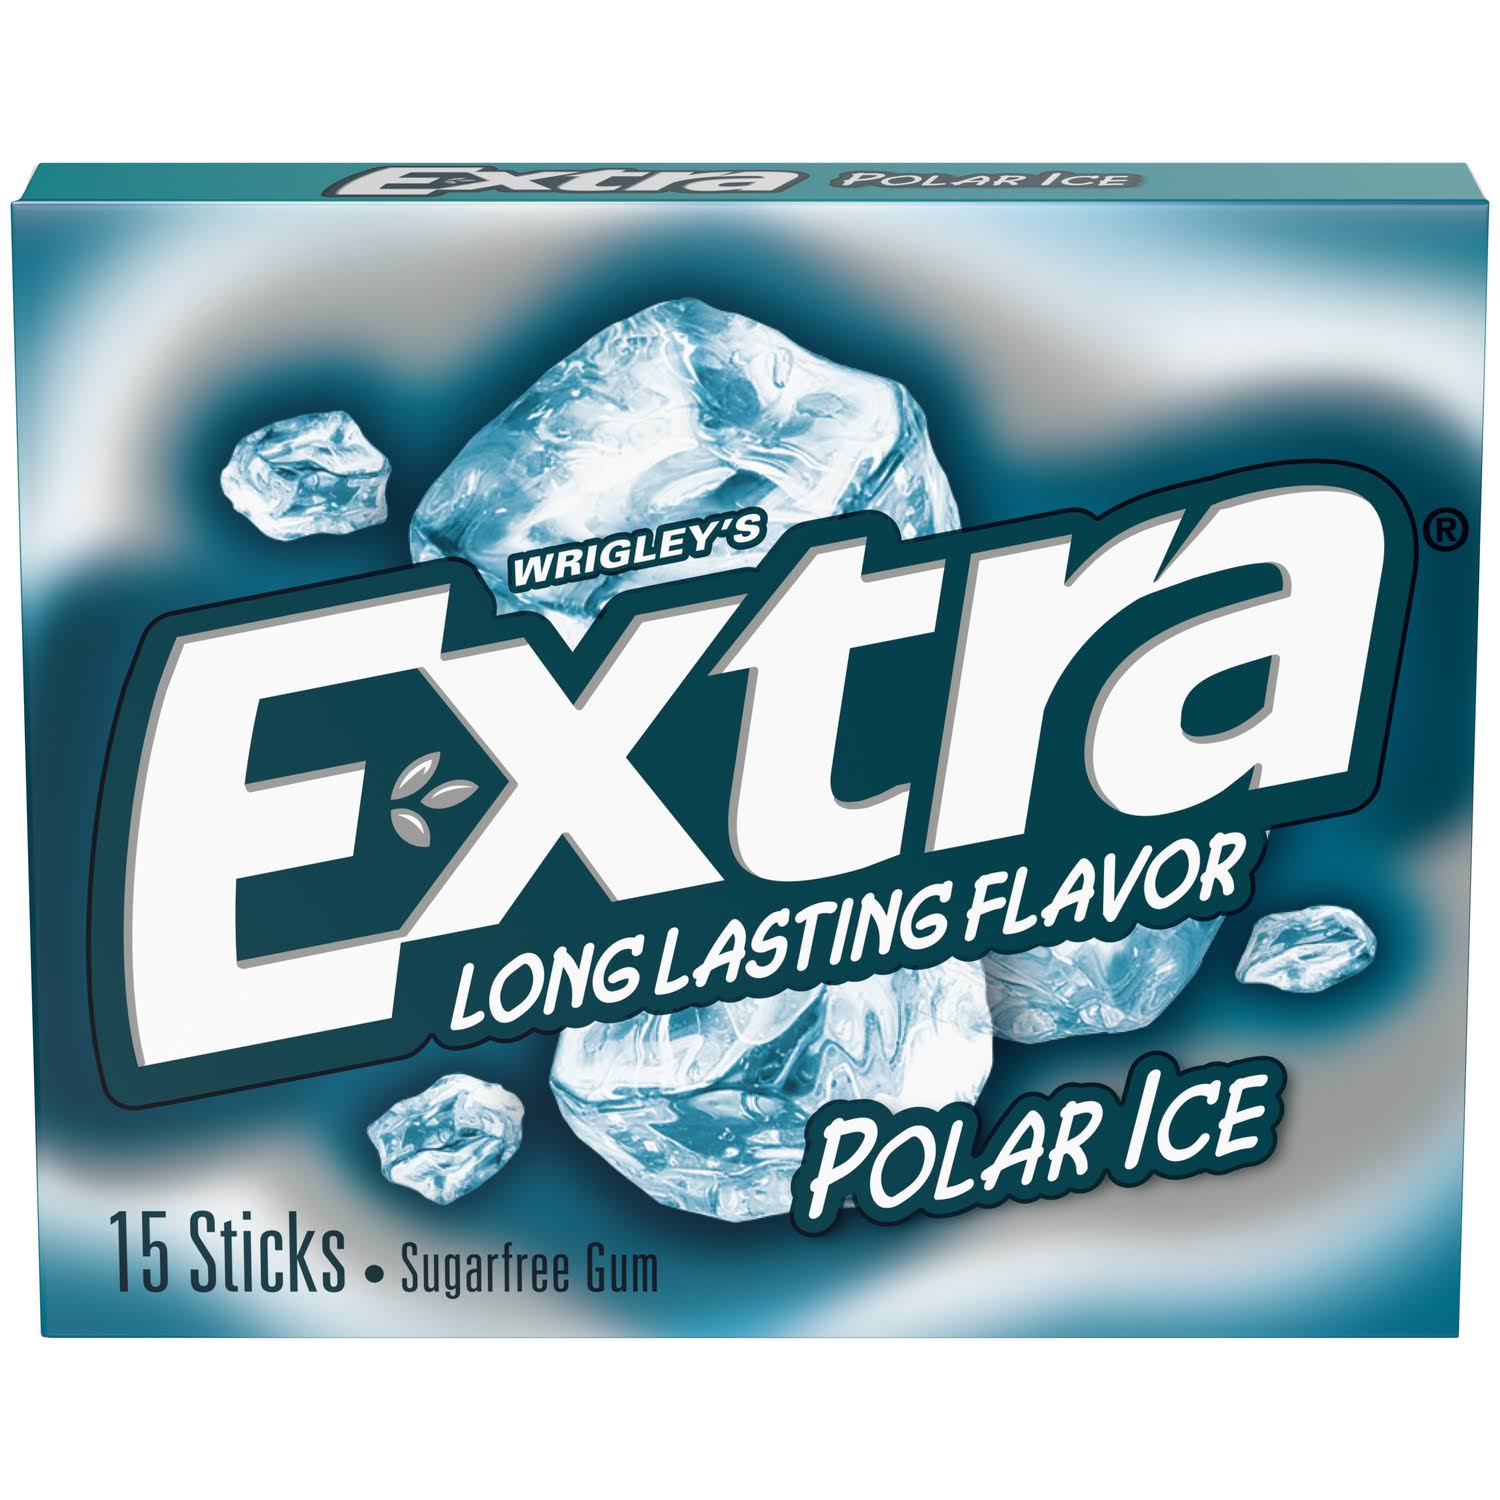 Wrigley's Extra Long Lasting Flavor Sugar Free Gum - Polar Ice